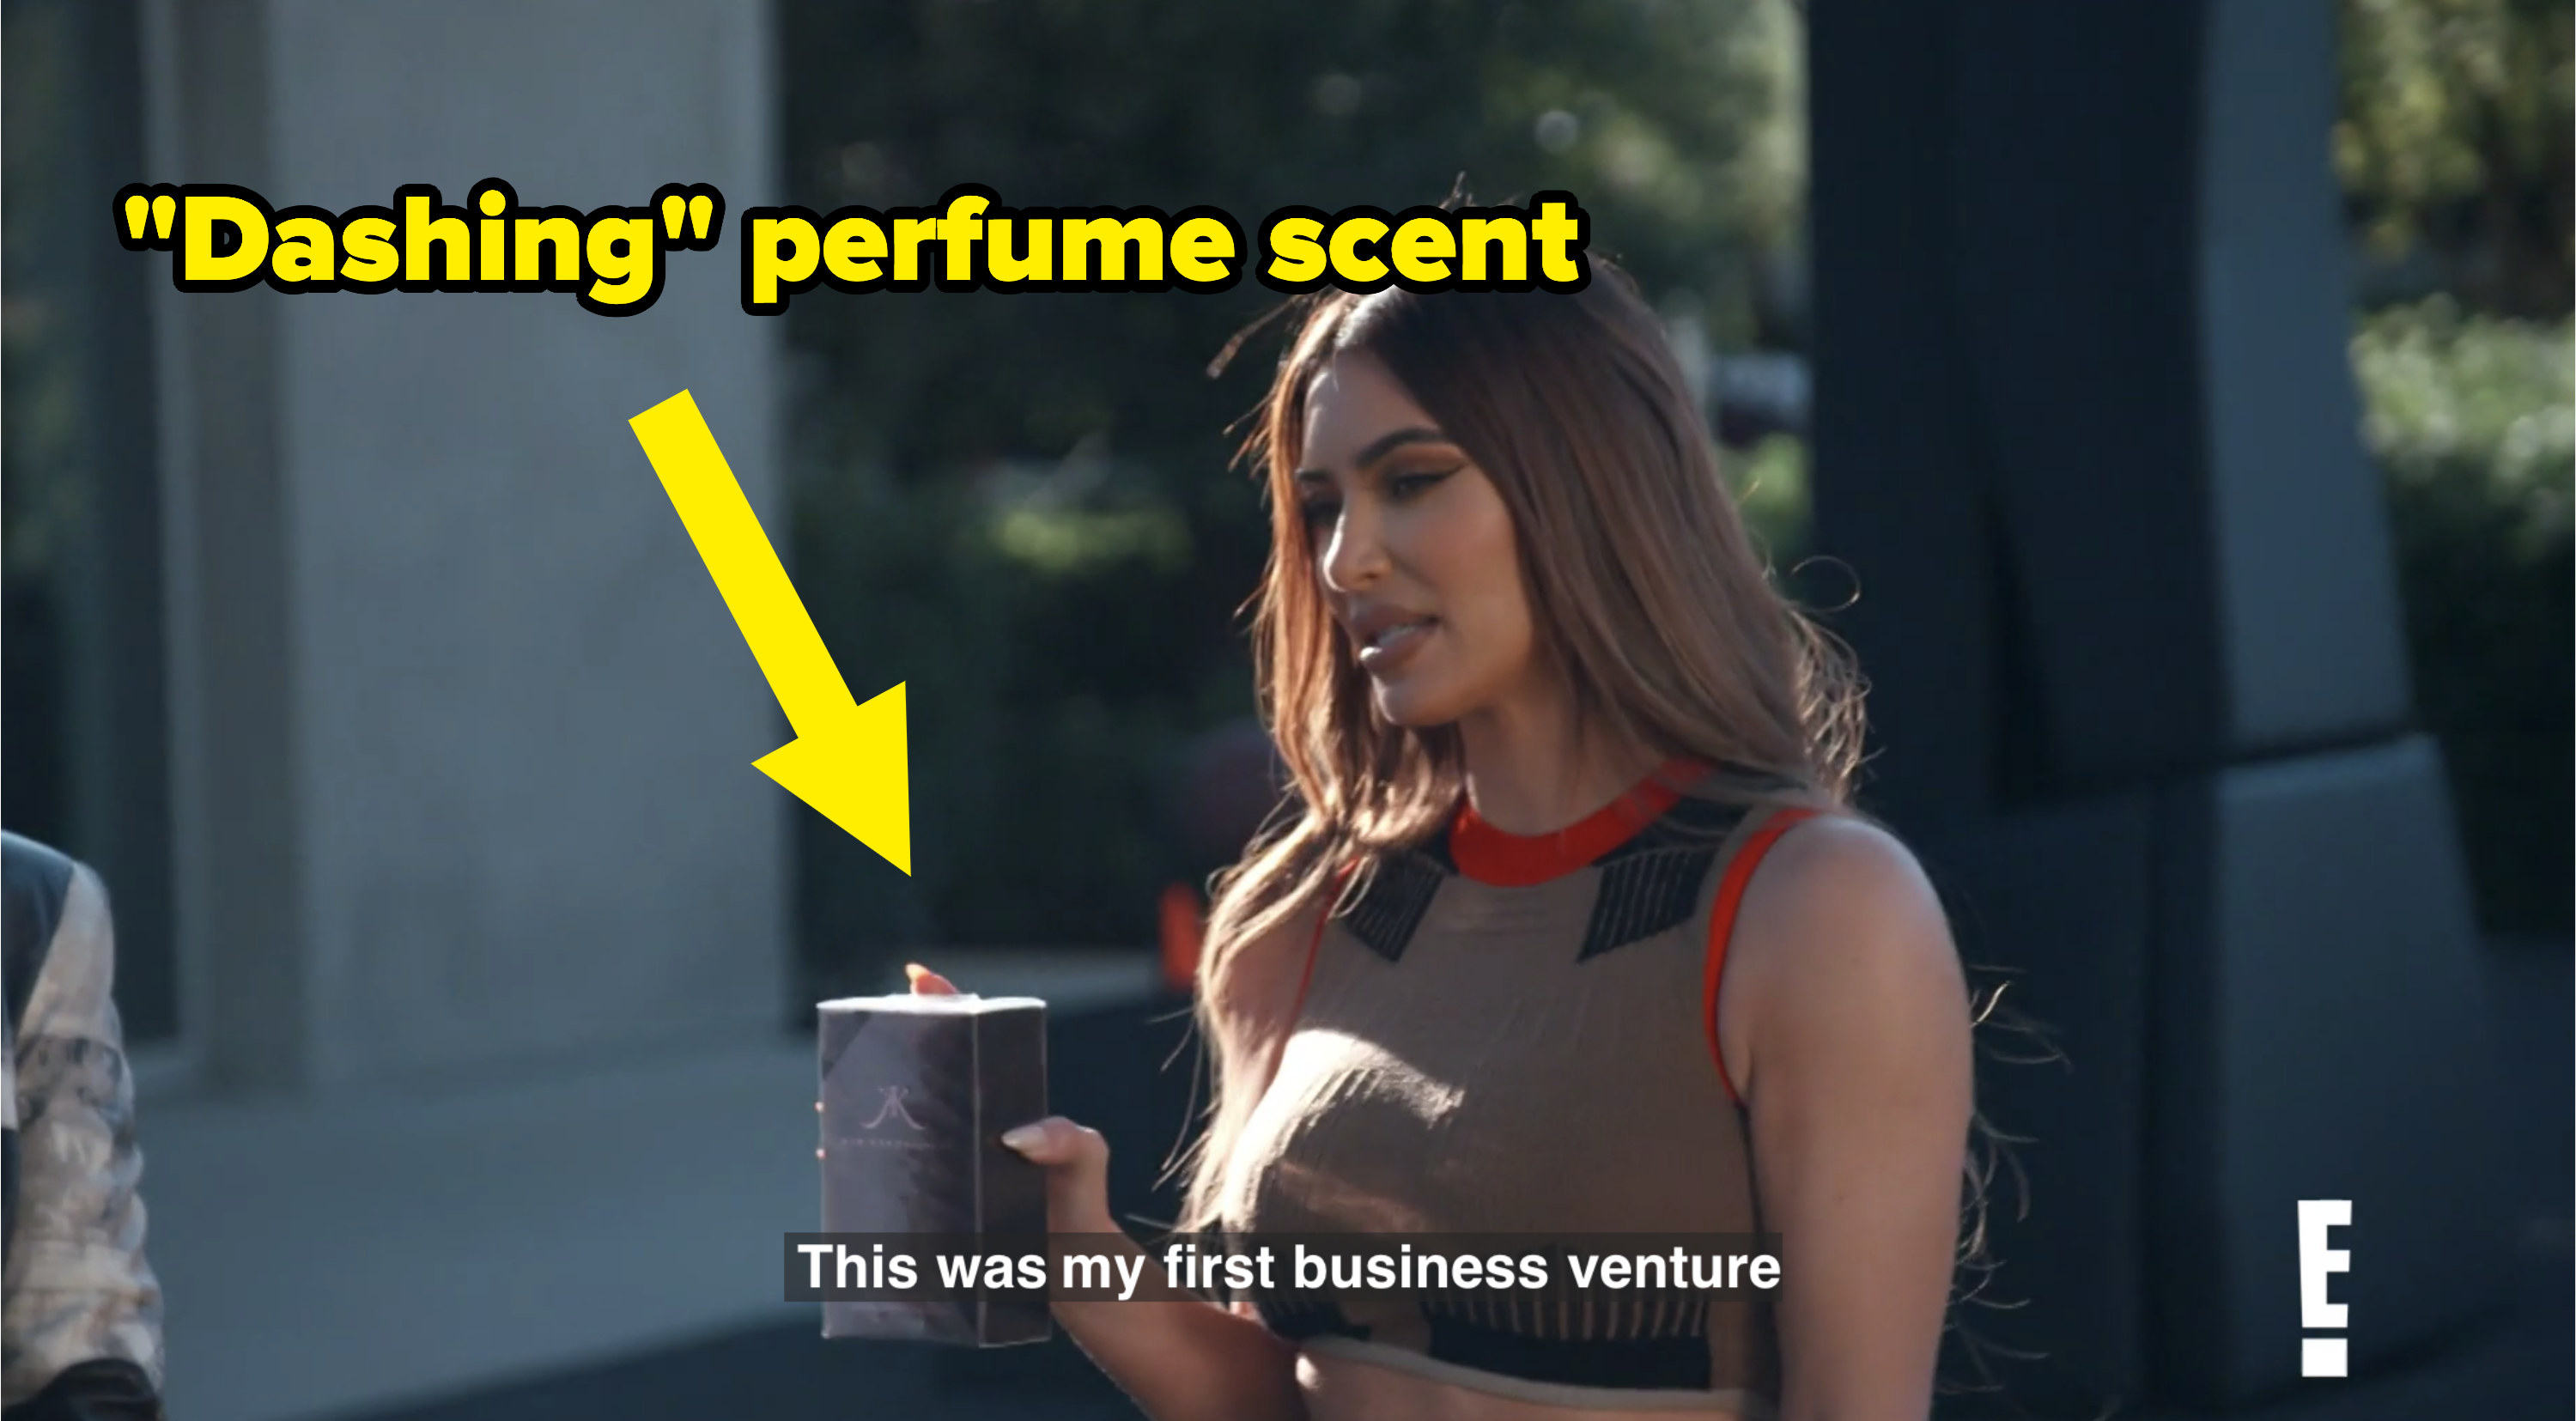 Kim and her perfume